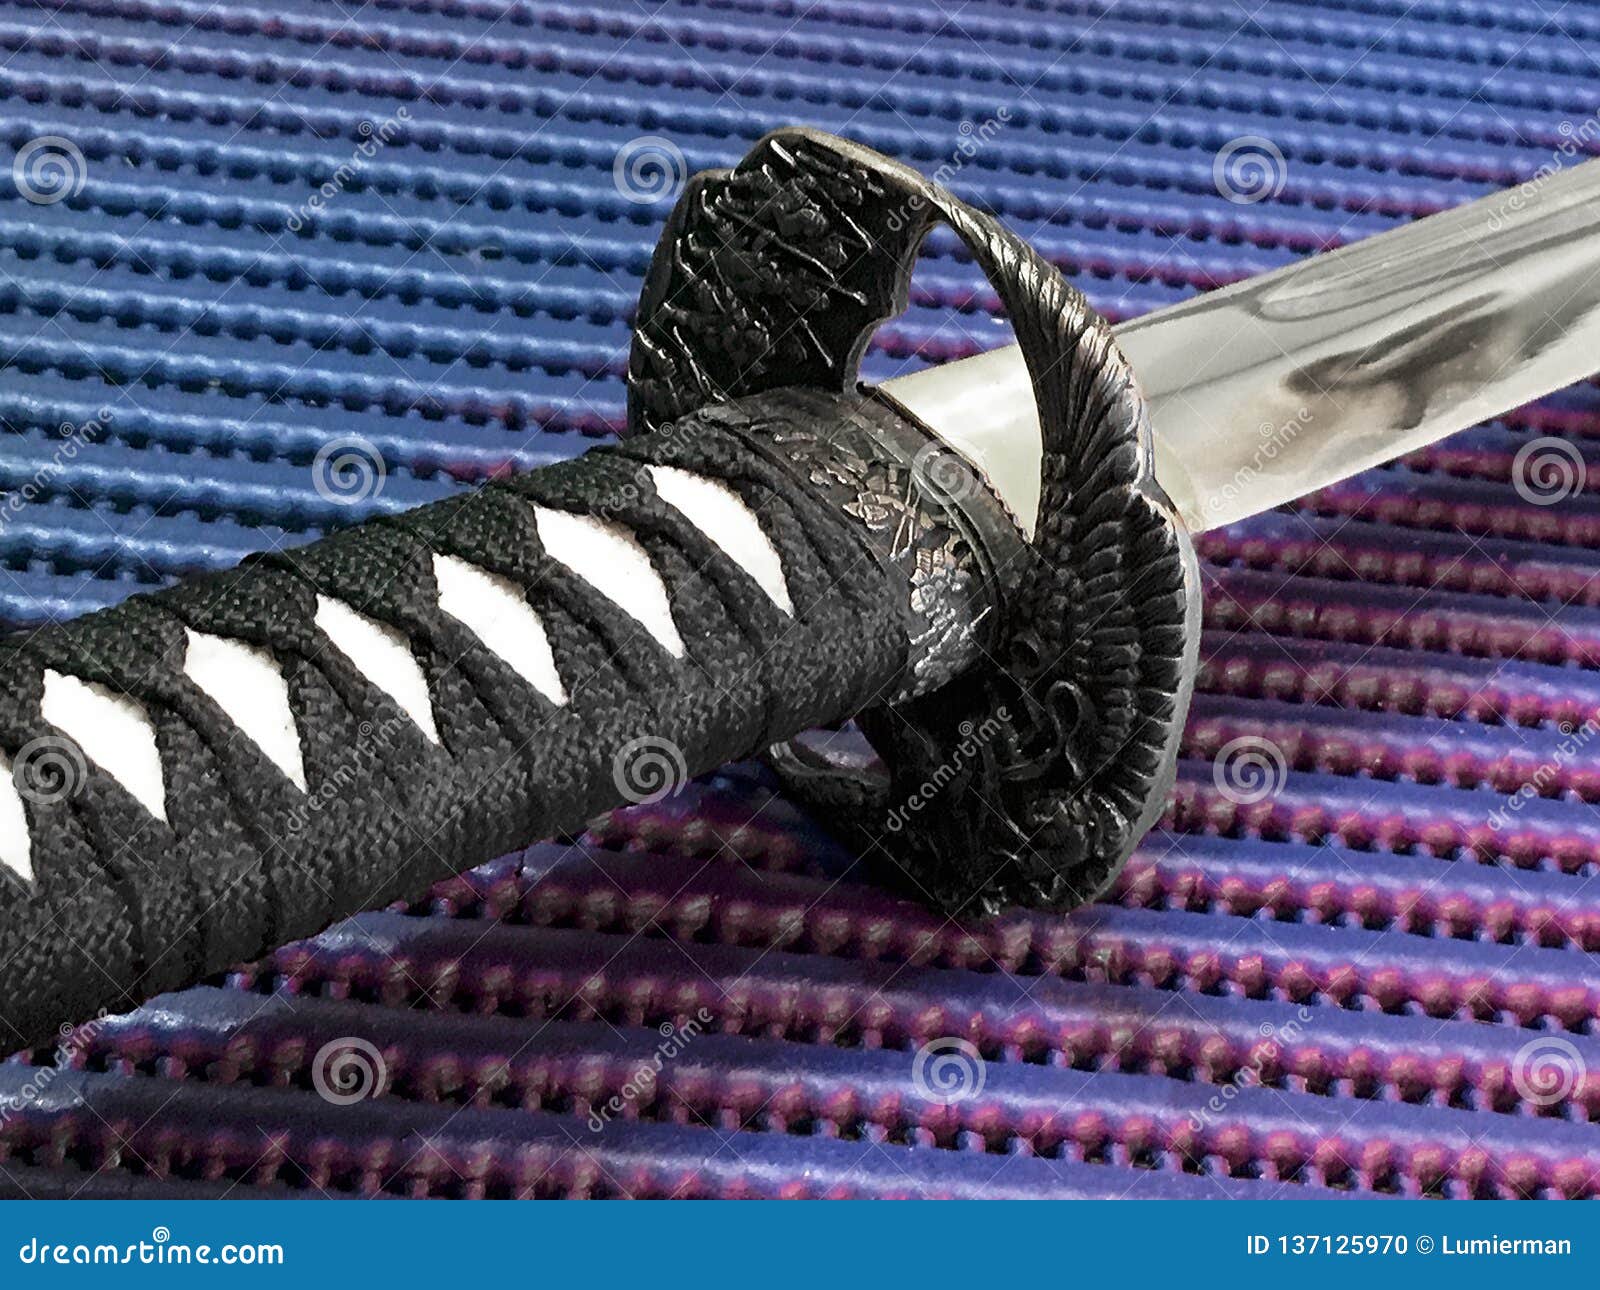 Beautiful Detail of Katana Sword Handle Stock Photo - Image of